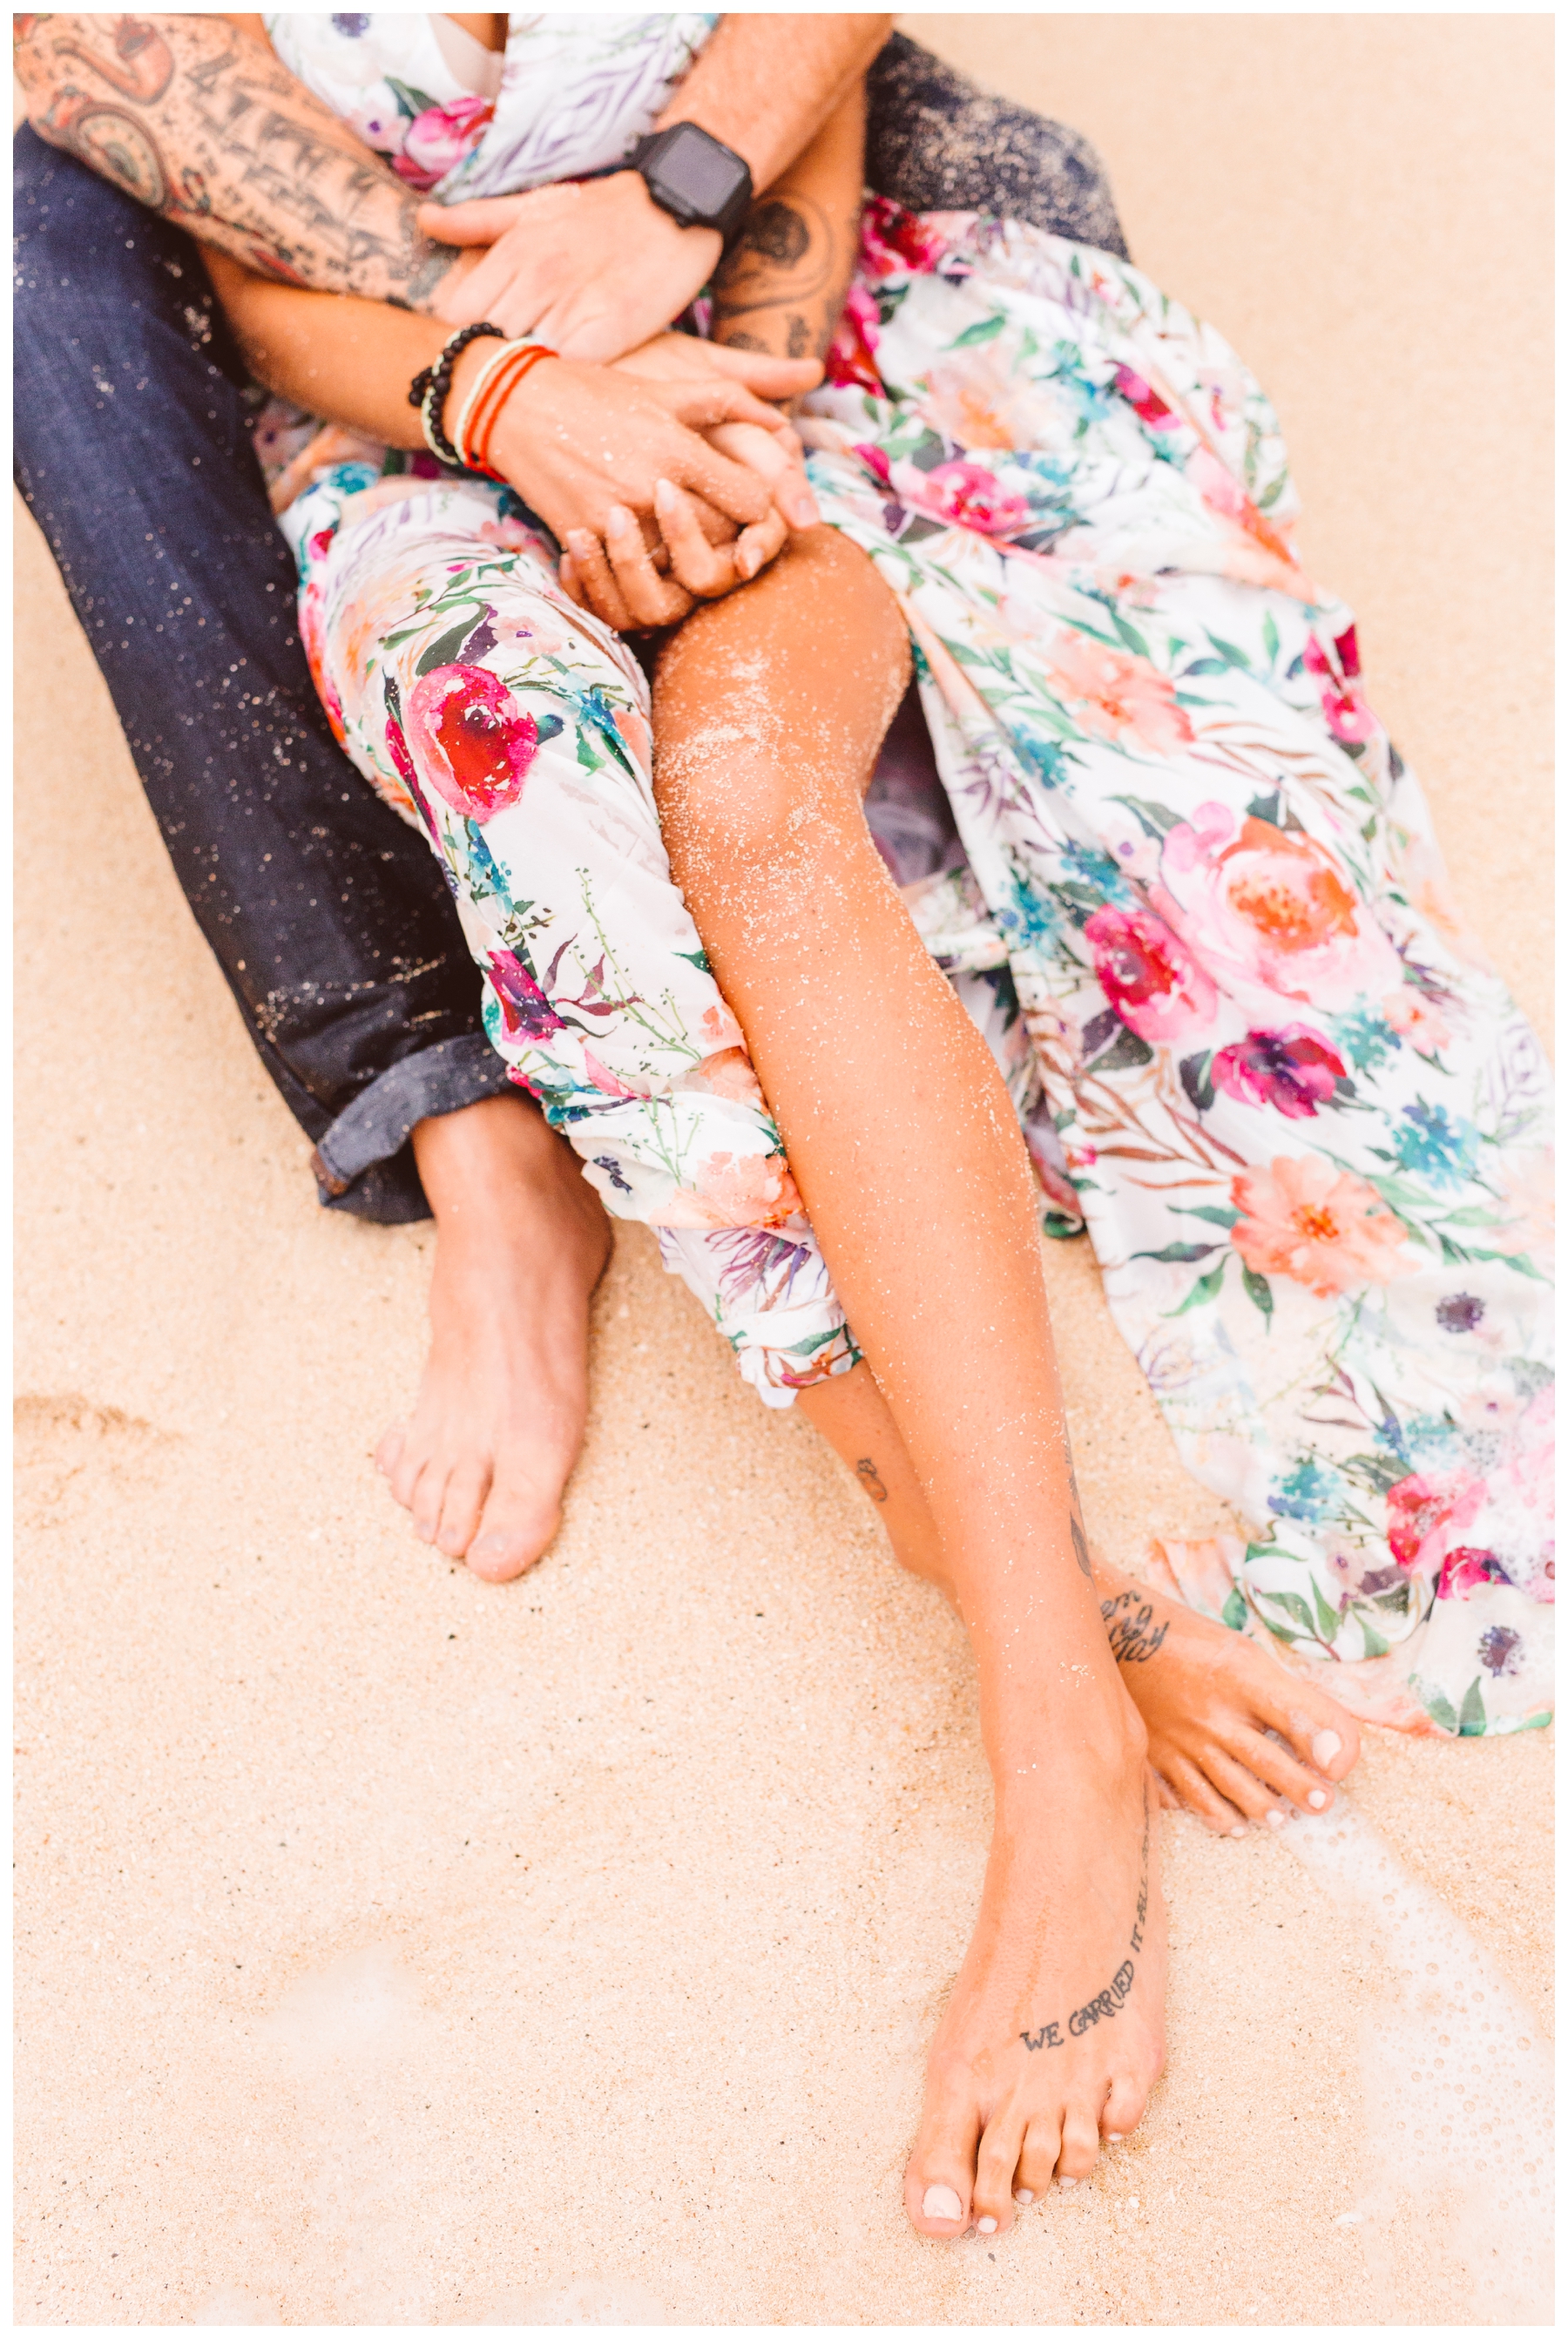 Oahu Colorful Engagement Inspiration - Hawaiian Lifestyle Portraits - Brooke Michelle Photography